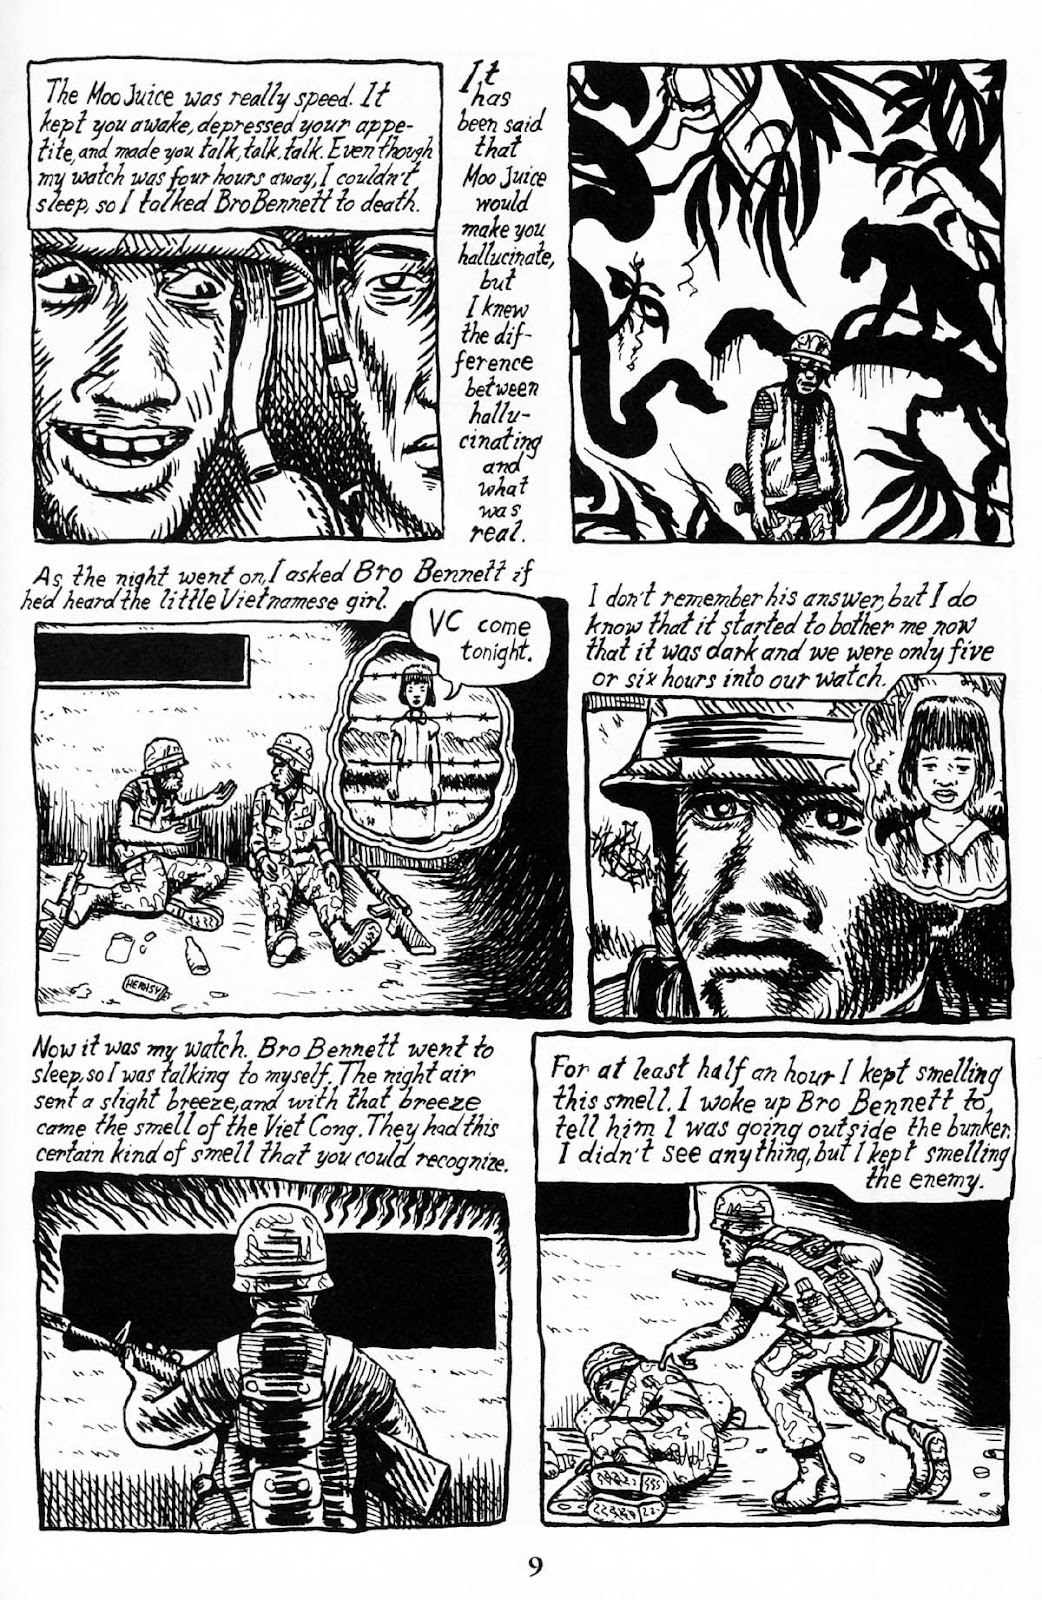 American Splendor: Unsung Hero issue 2 - Page 11